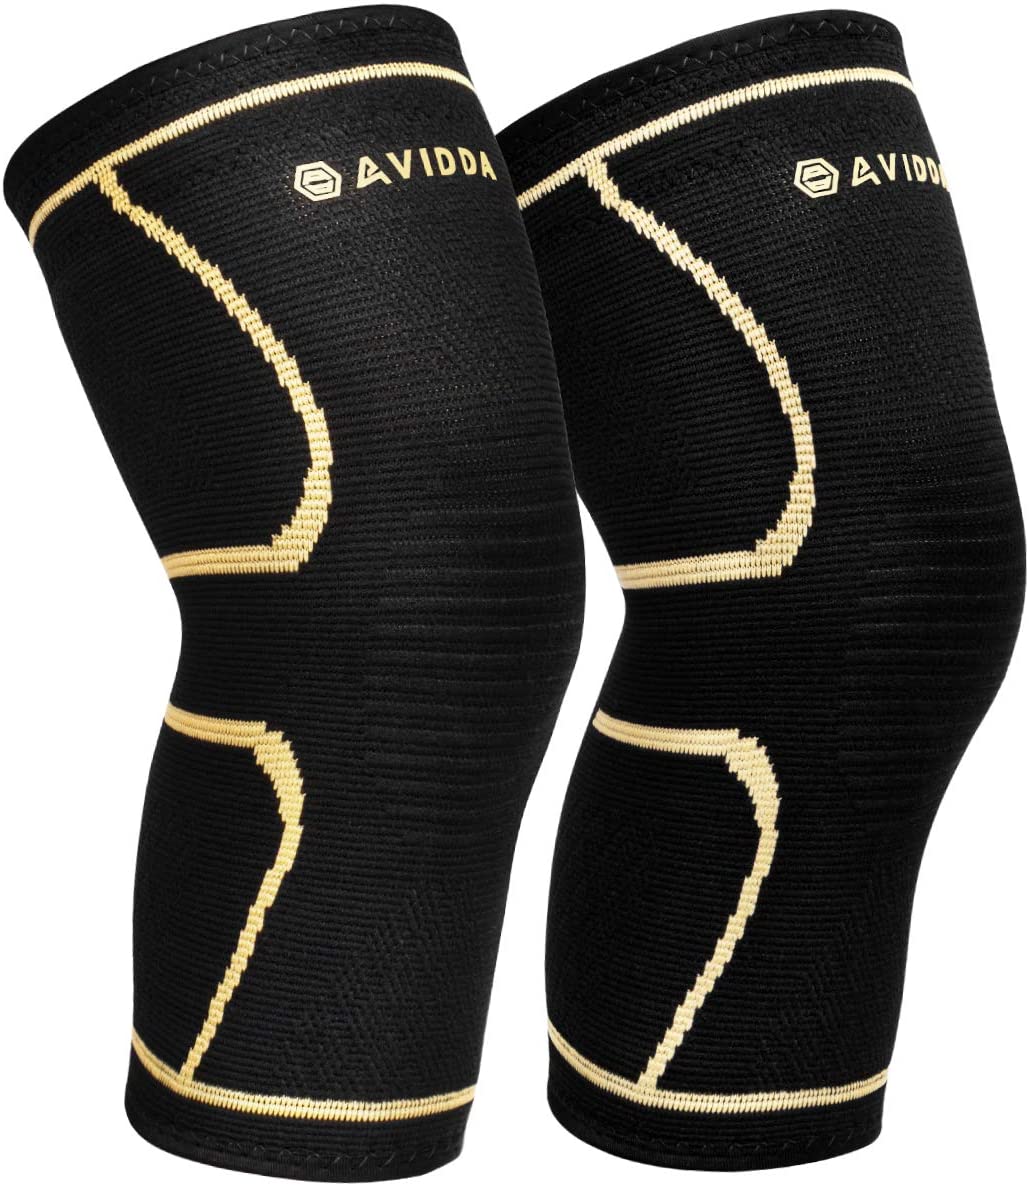 AVIDDA Knee Support Brace 2 Pack - Compression Knee Sleeves for